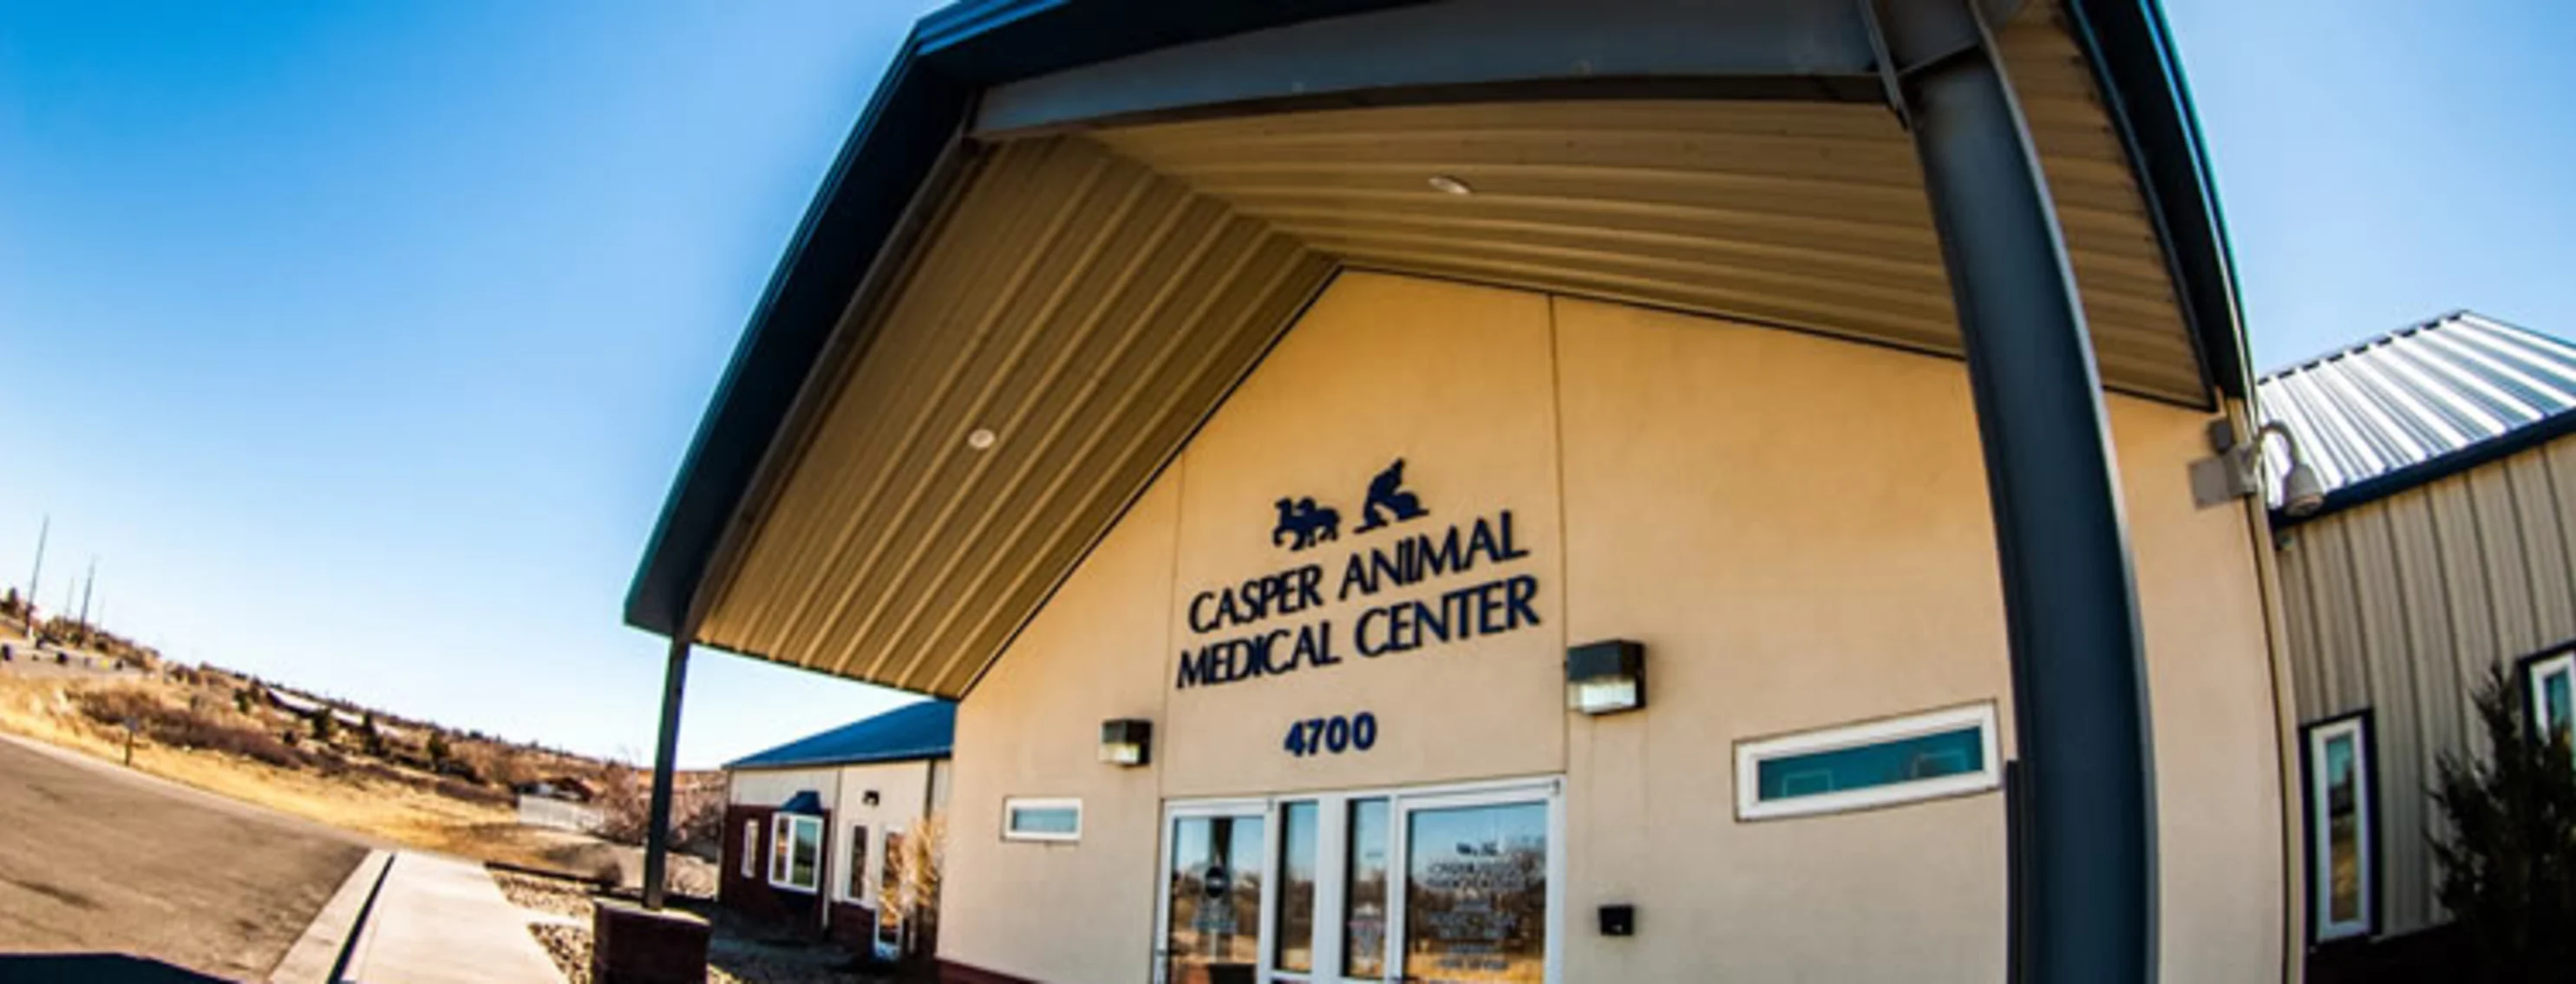 Casper Animal Medical Center Exterior